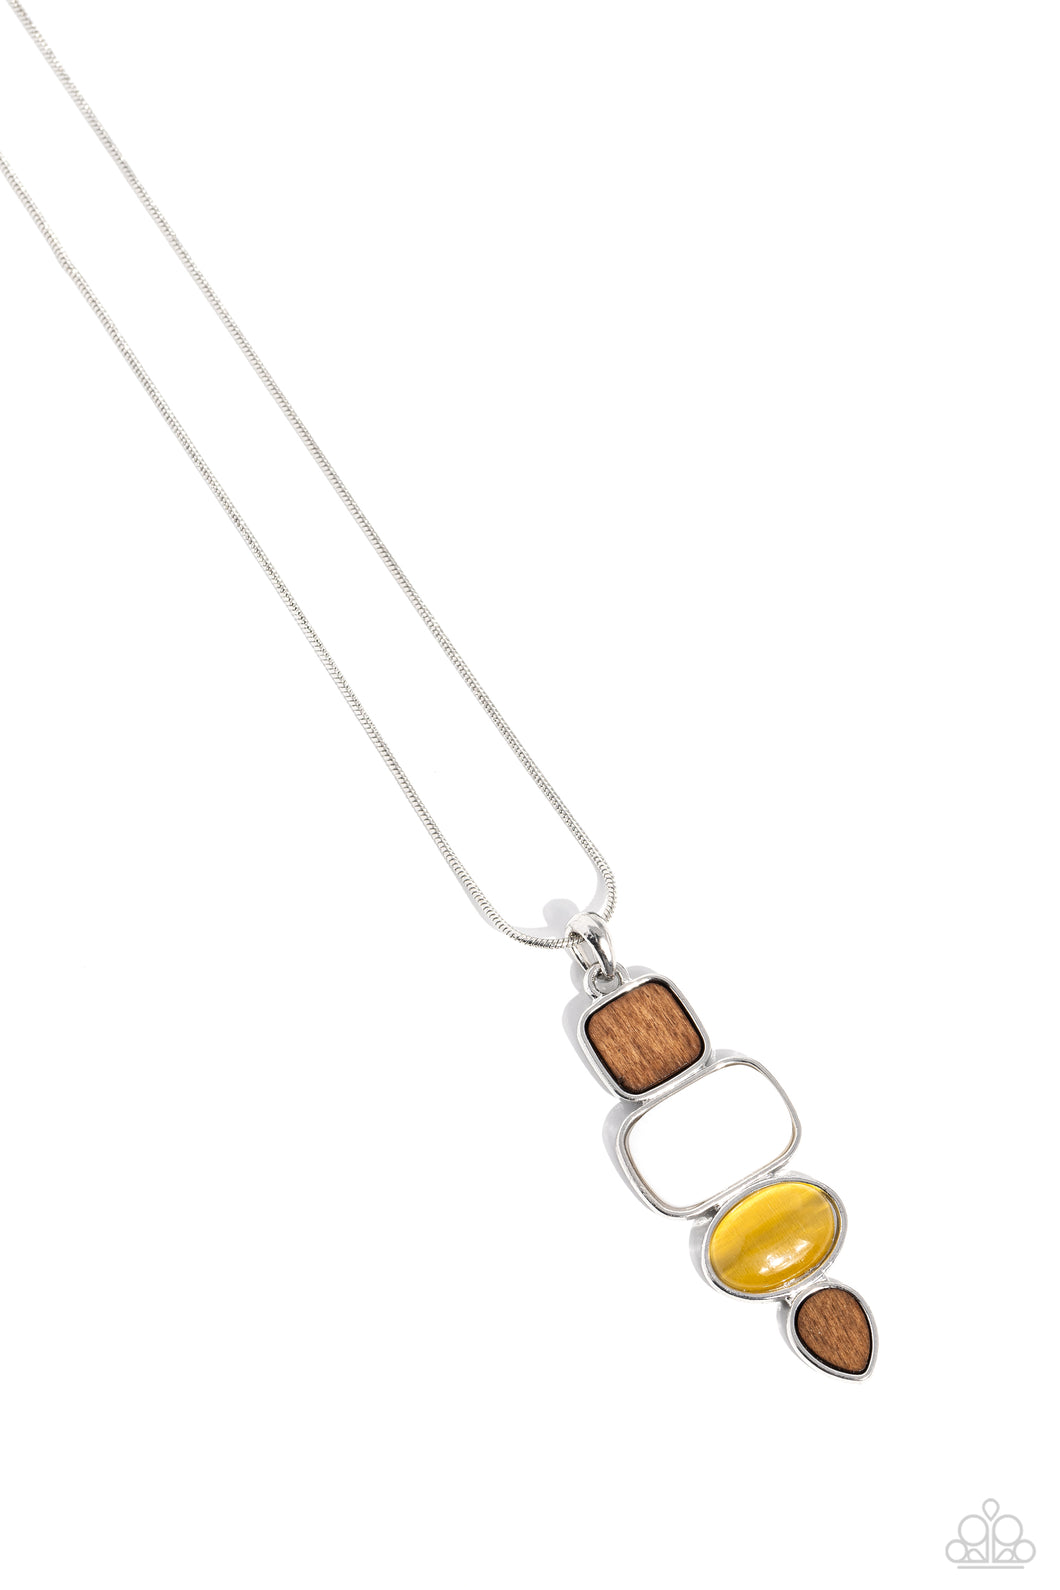 Elemental Energy - Yellow Necklace